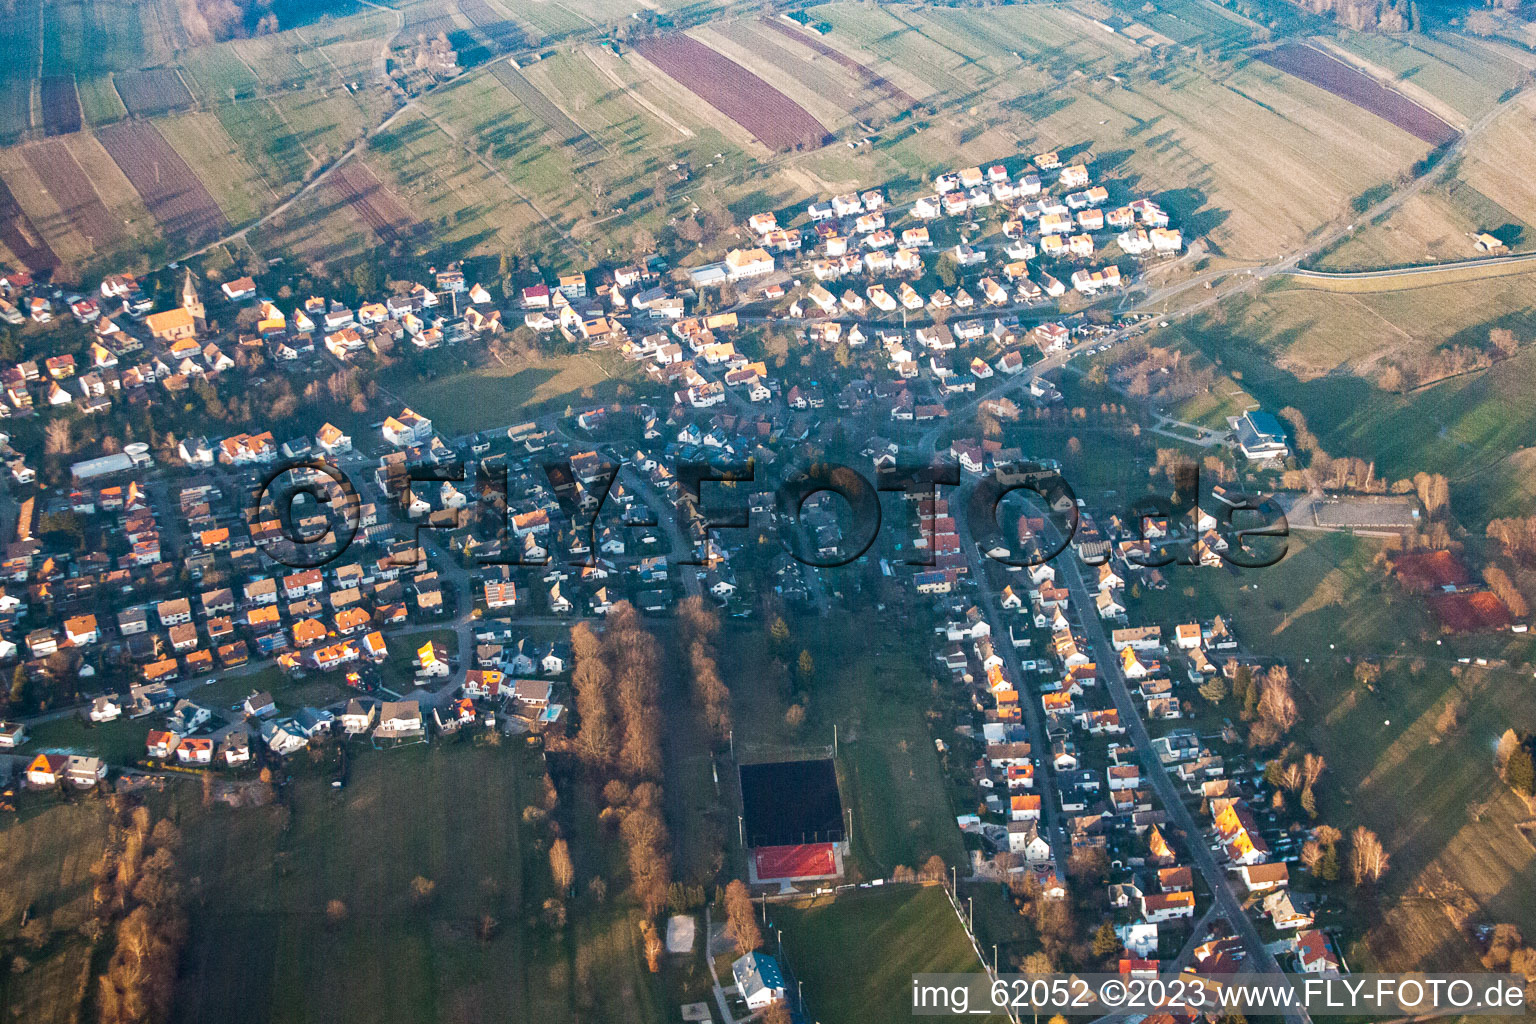 Quartier Völkersbach in Malsch dans le département Bade-Wurtemberg, Allemagne vu d'un drone